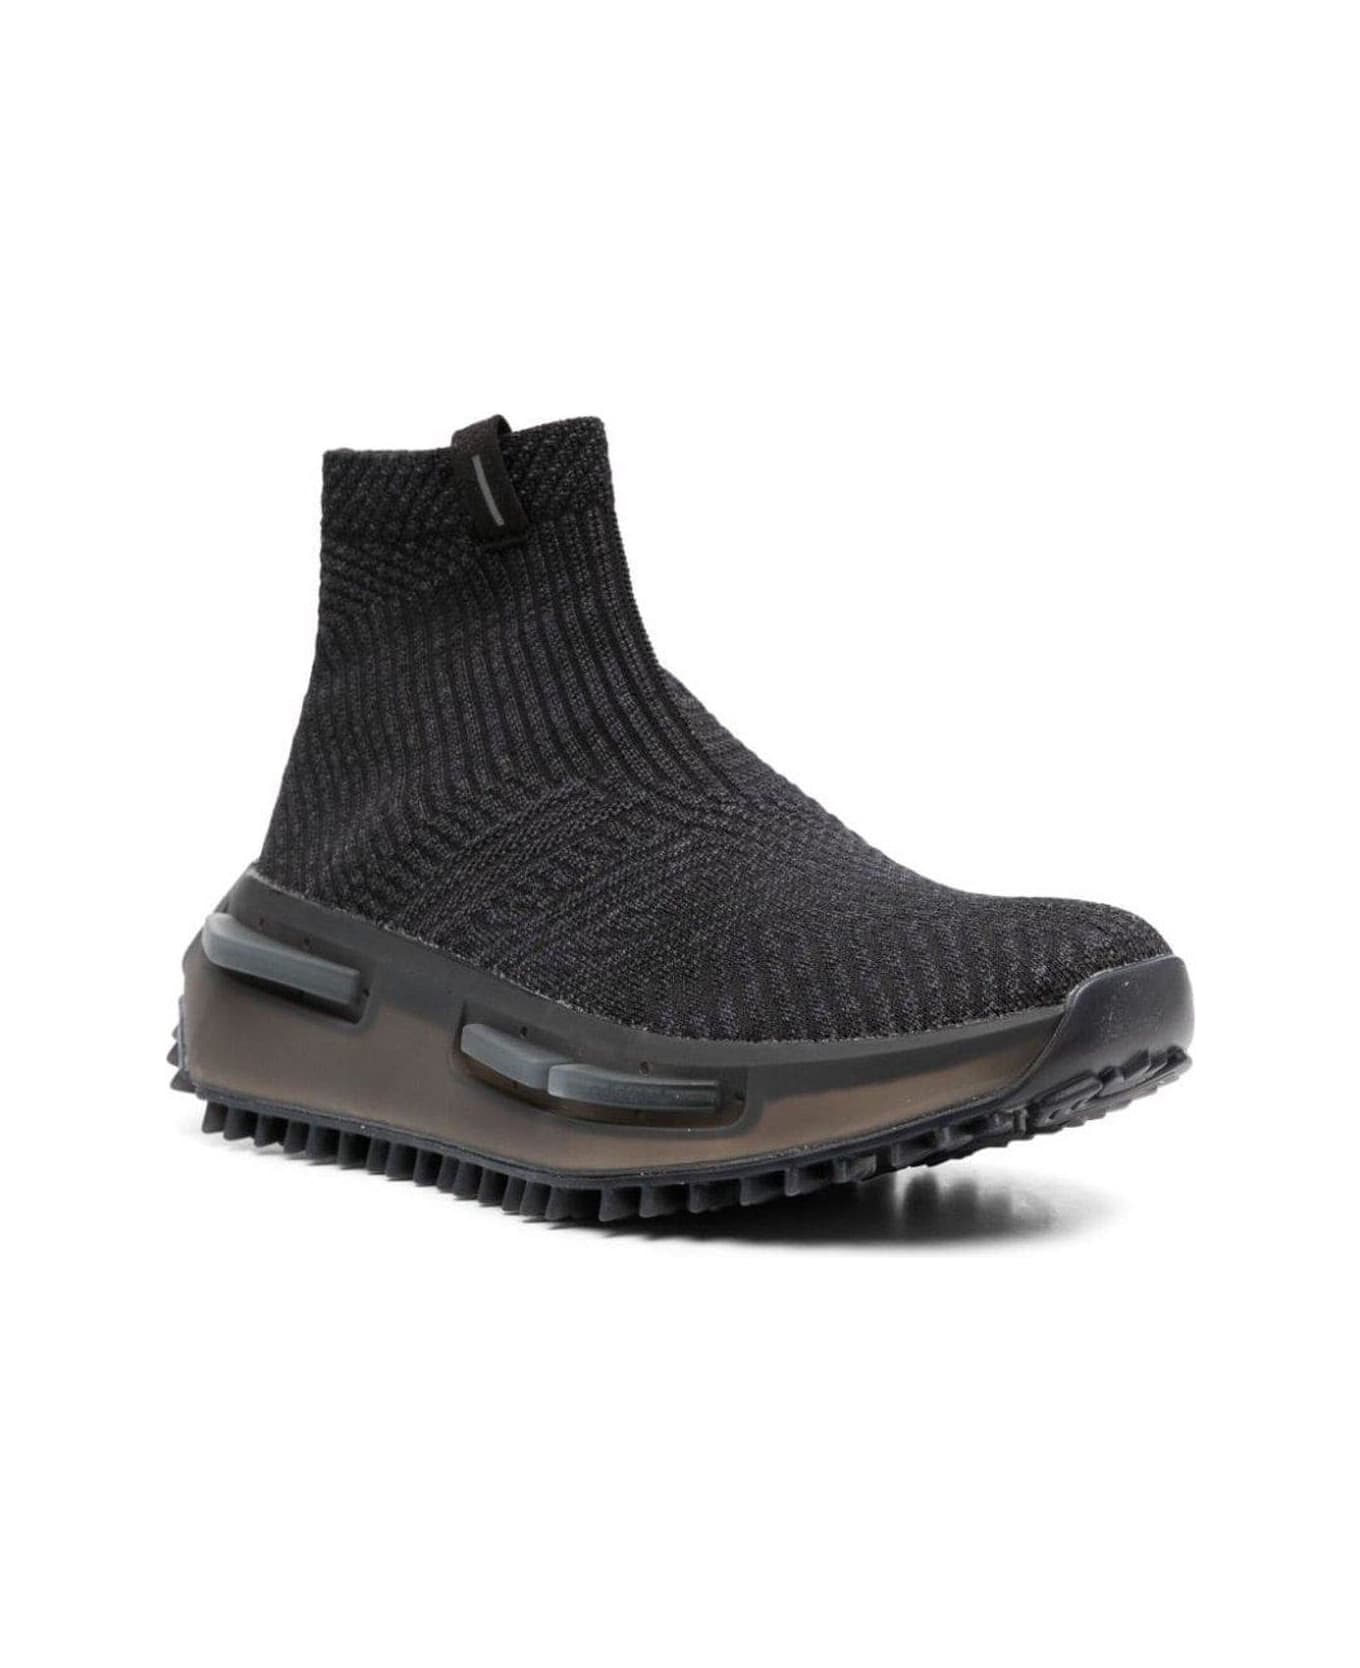 Adidas Originals Nmd_s1 Sock Sneakers - Cblack Carbon Cblack